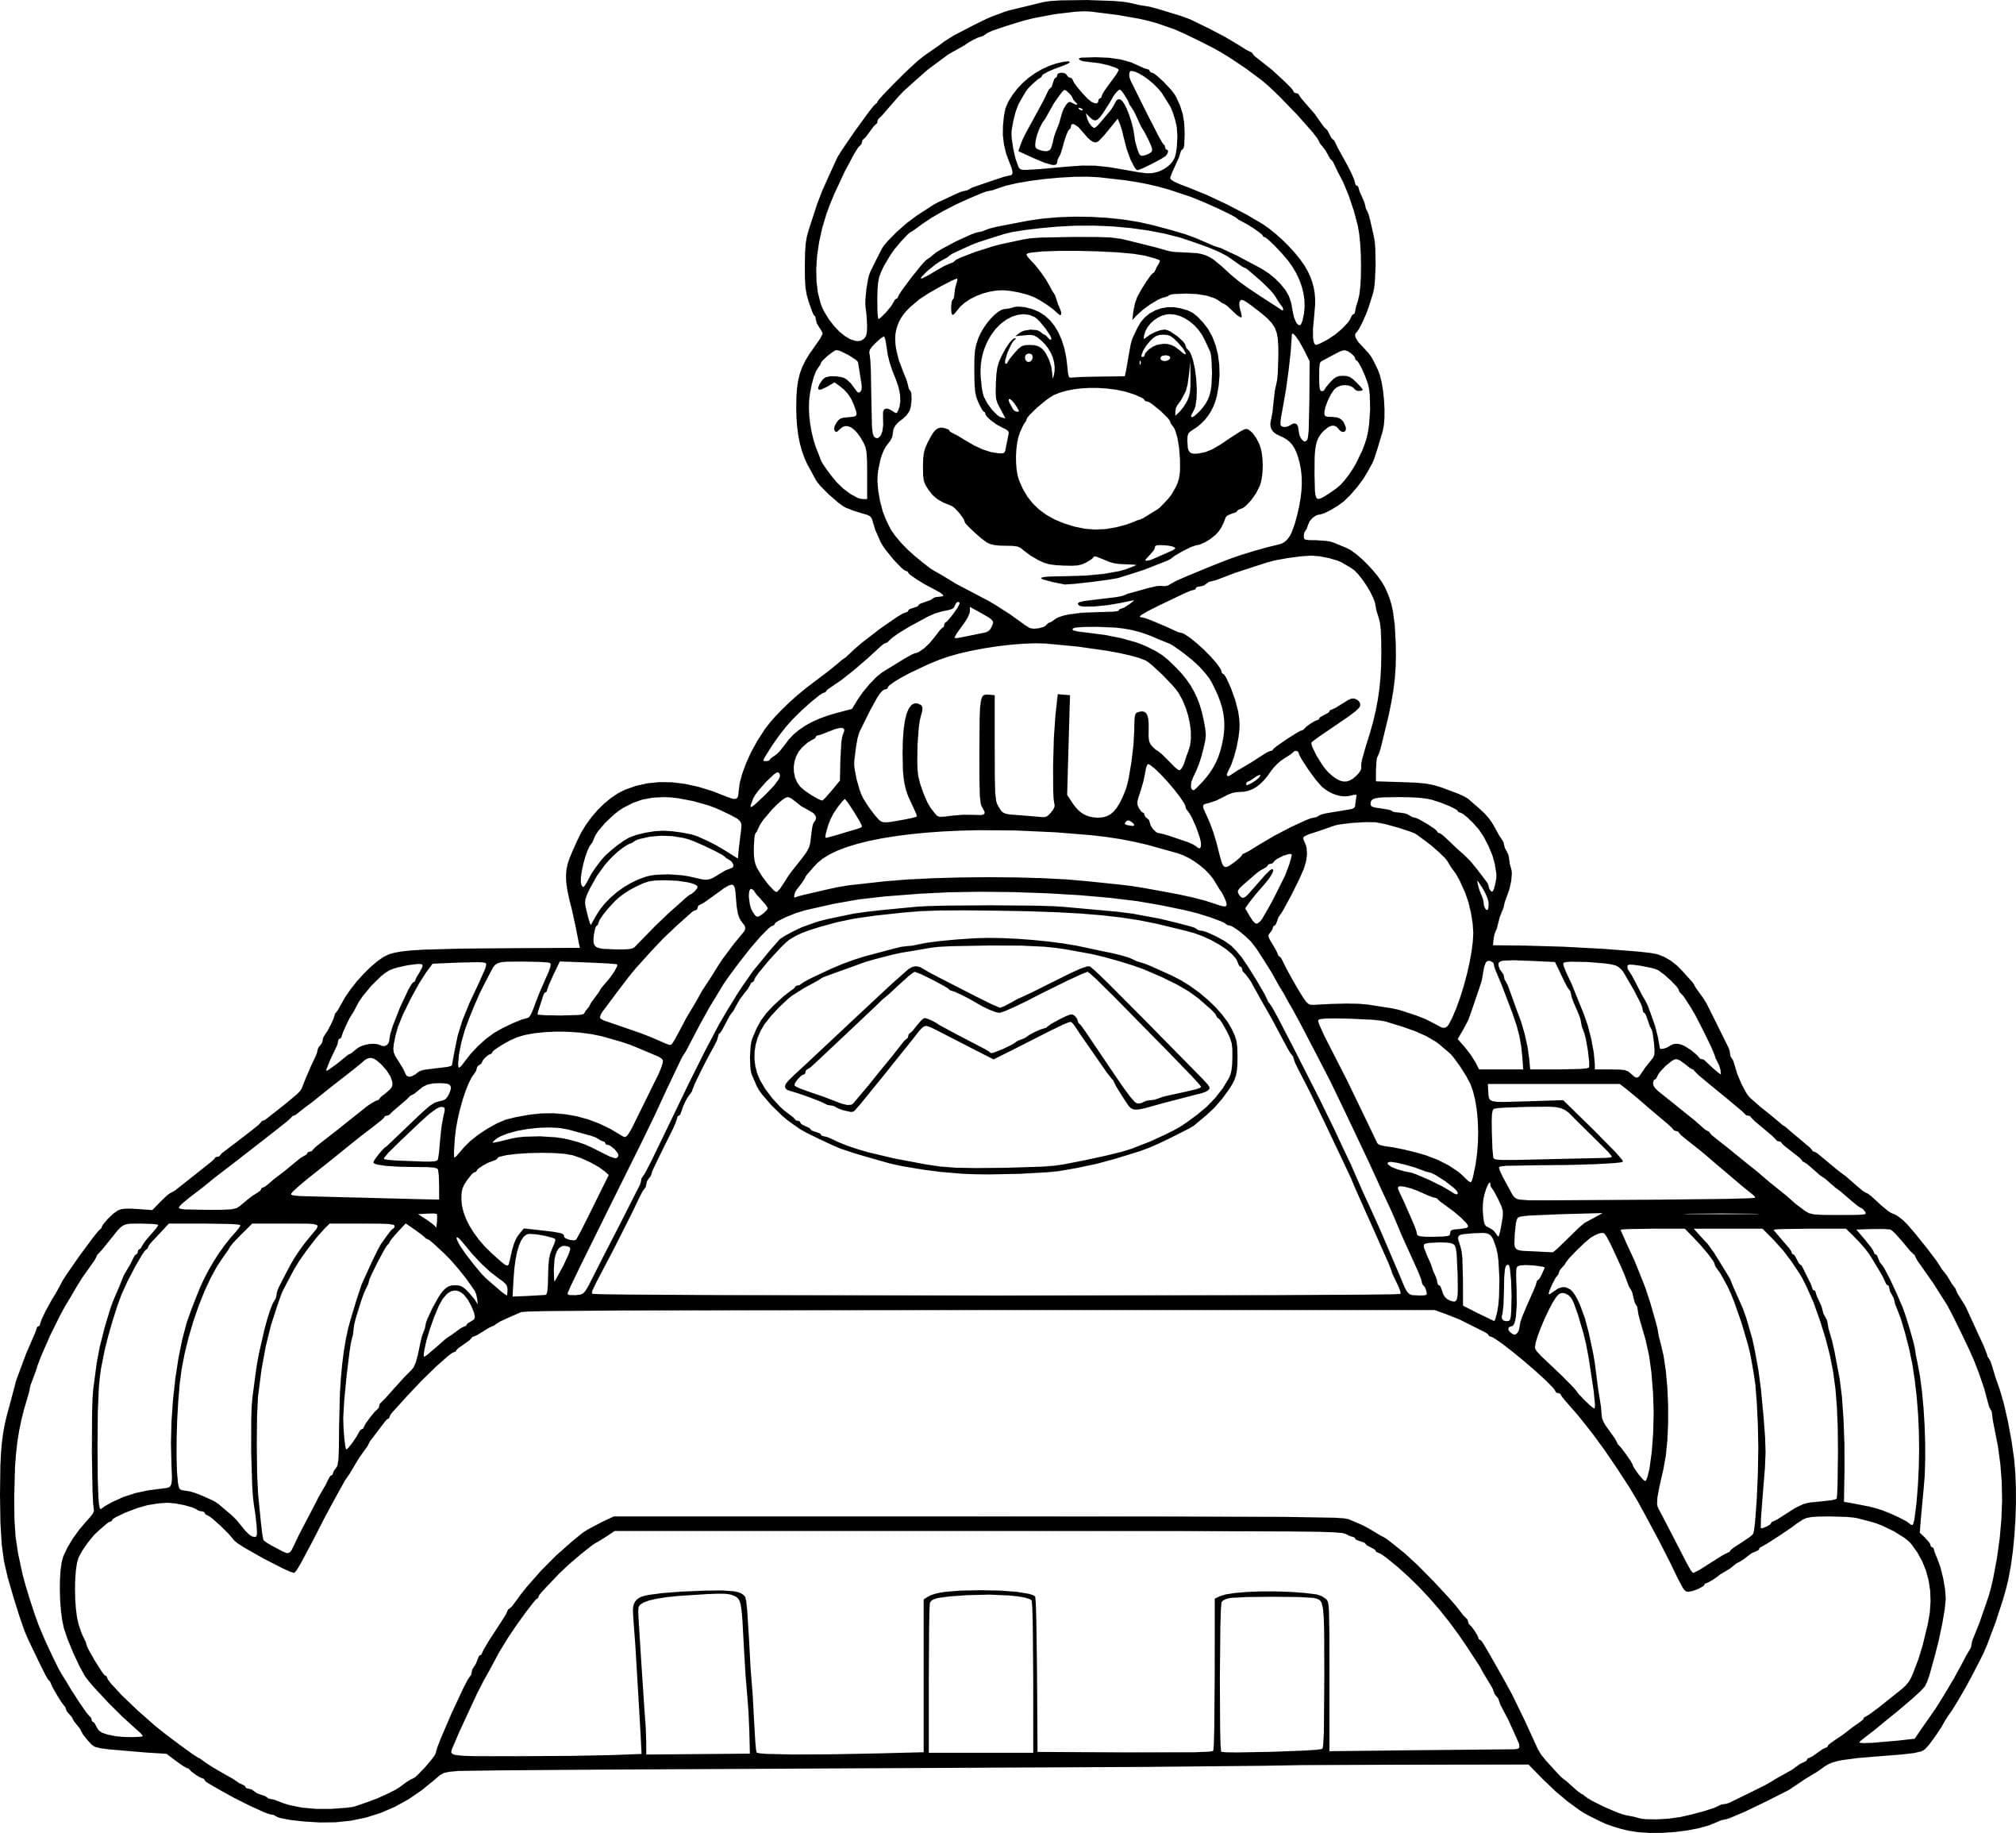 Kolorowanki Super Mario 07 Super Mario do wydrukowania i pokolorowania